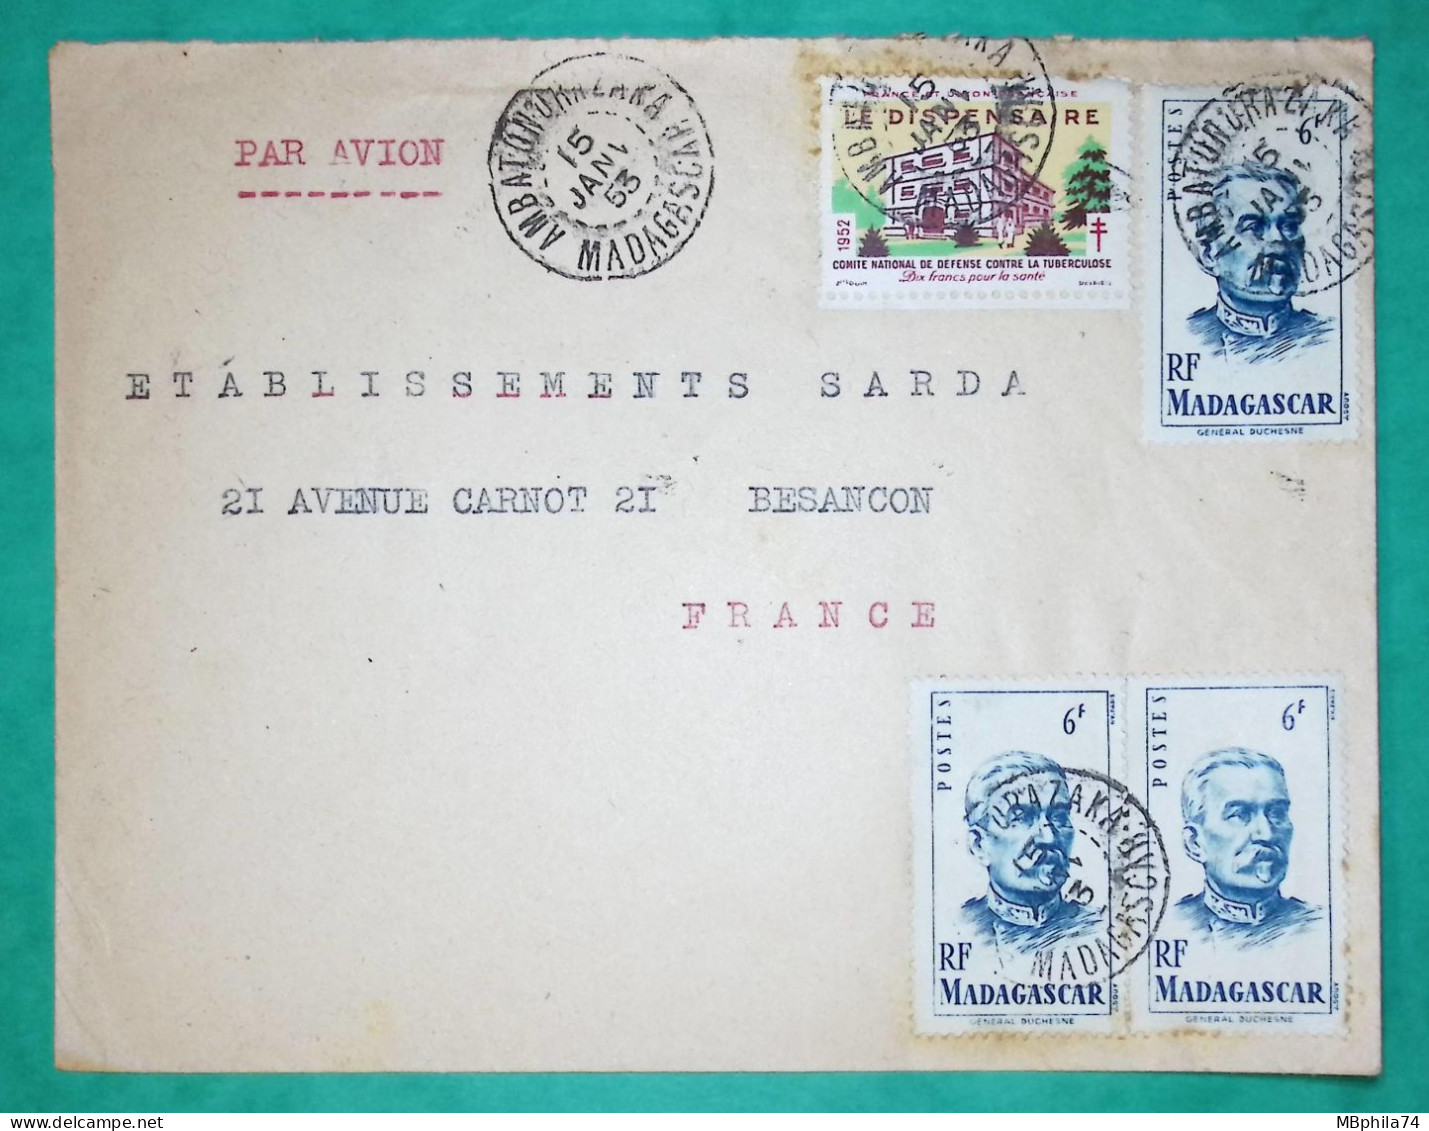 LETTRE PAR AVION MADAGASCAR AMBATONDRAZAKA VIGNETTE TUBERCULOSE POUR SARDA HORLOGERIE BESANCON DOUBS 1957 COVER FRANCE - Luftpost